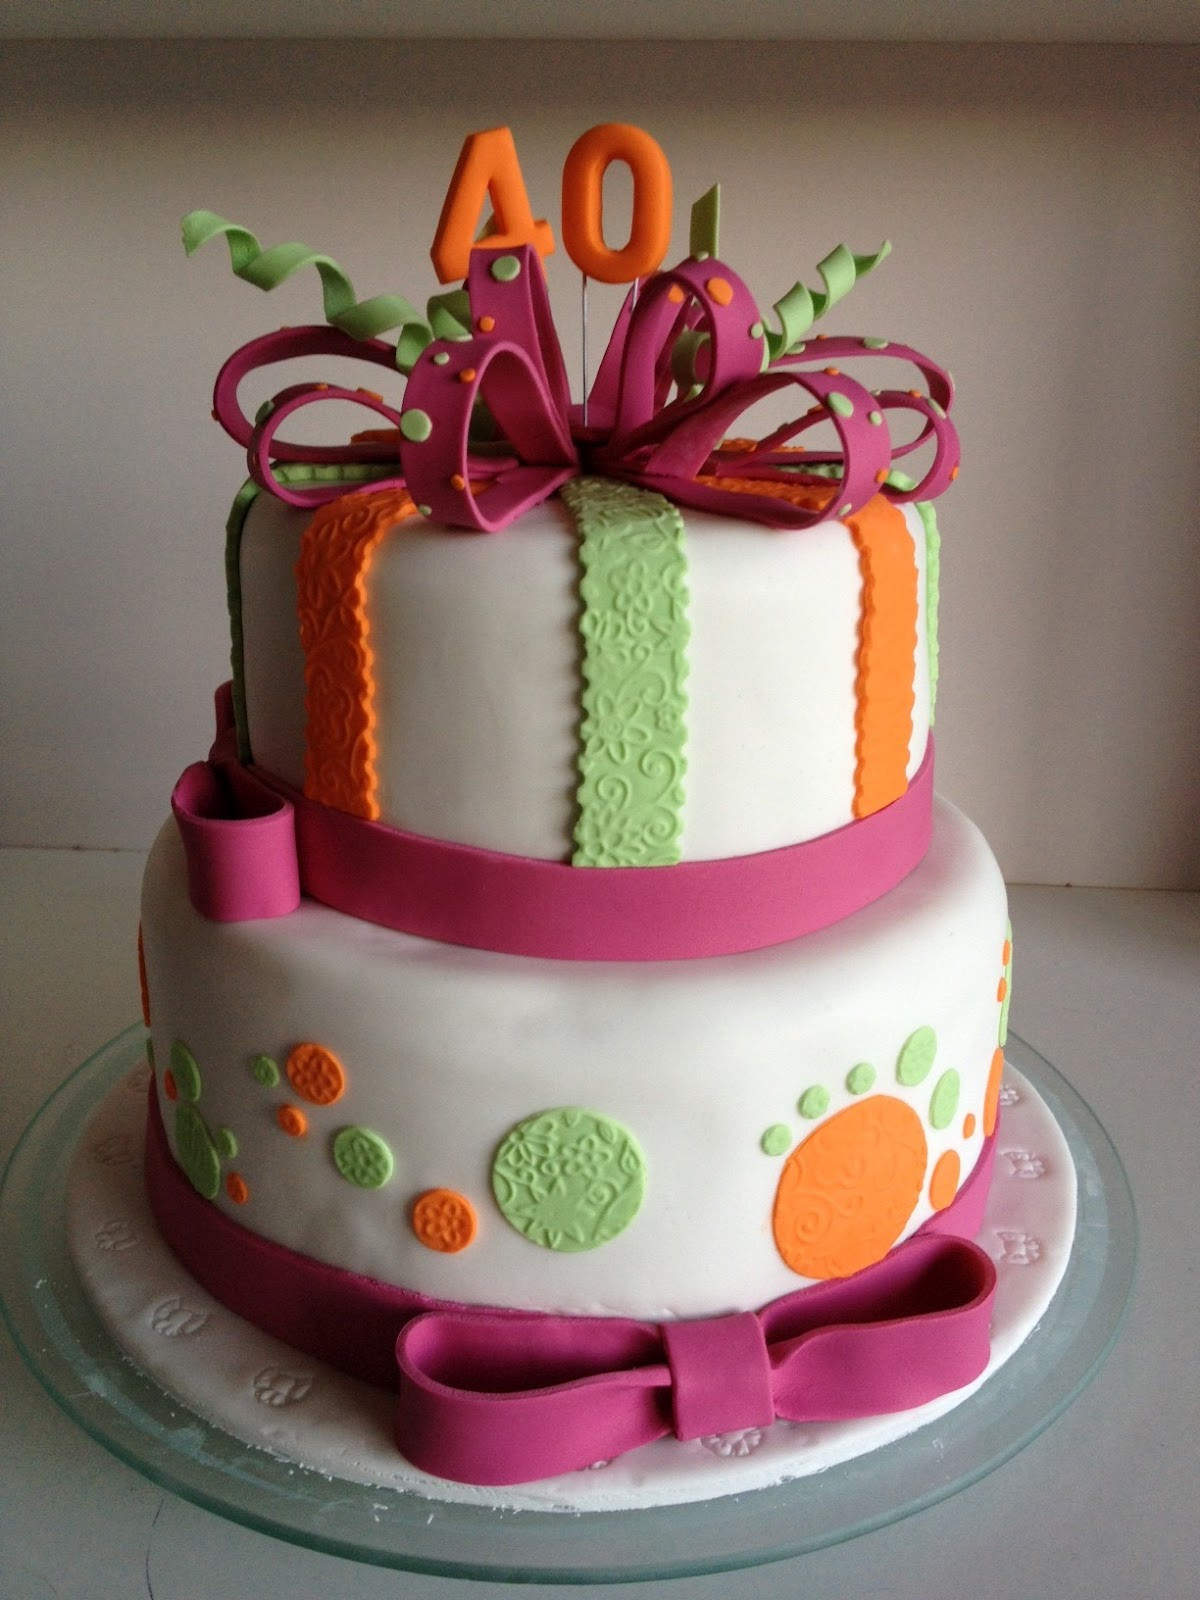 40th Birthday Cakes For Her
 Cake Story by Jenty Sally & Katharyn 40th Birthday